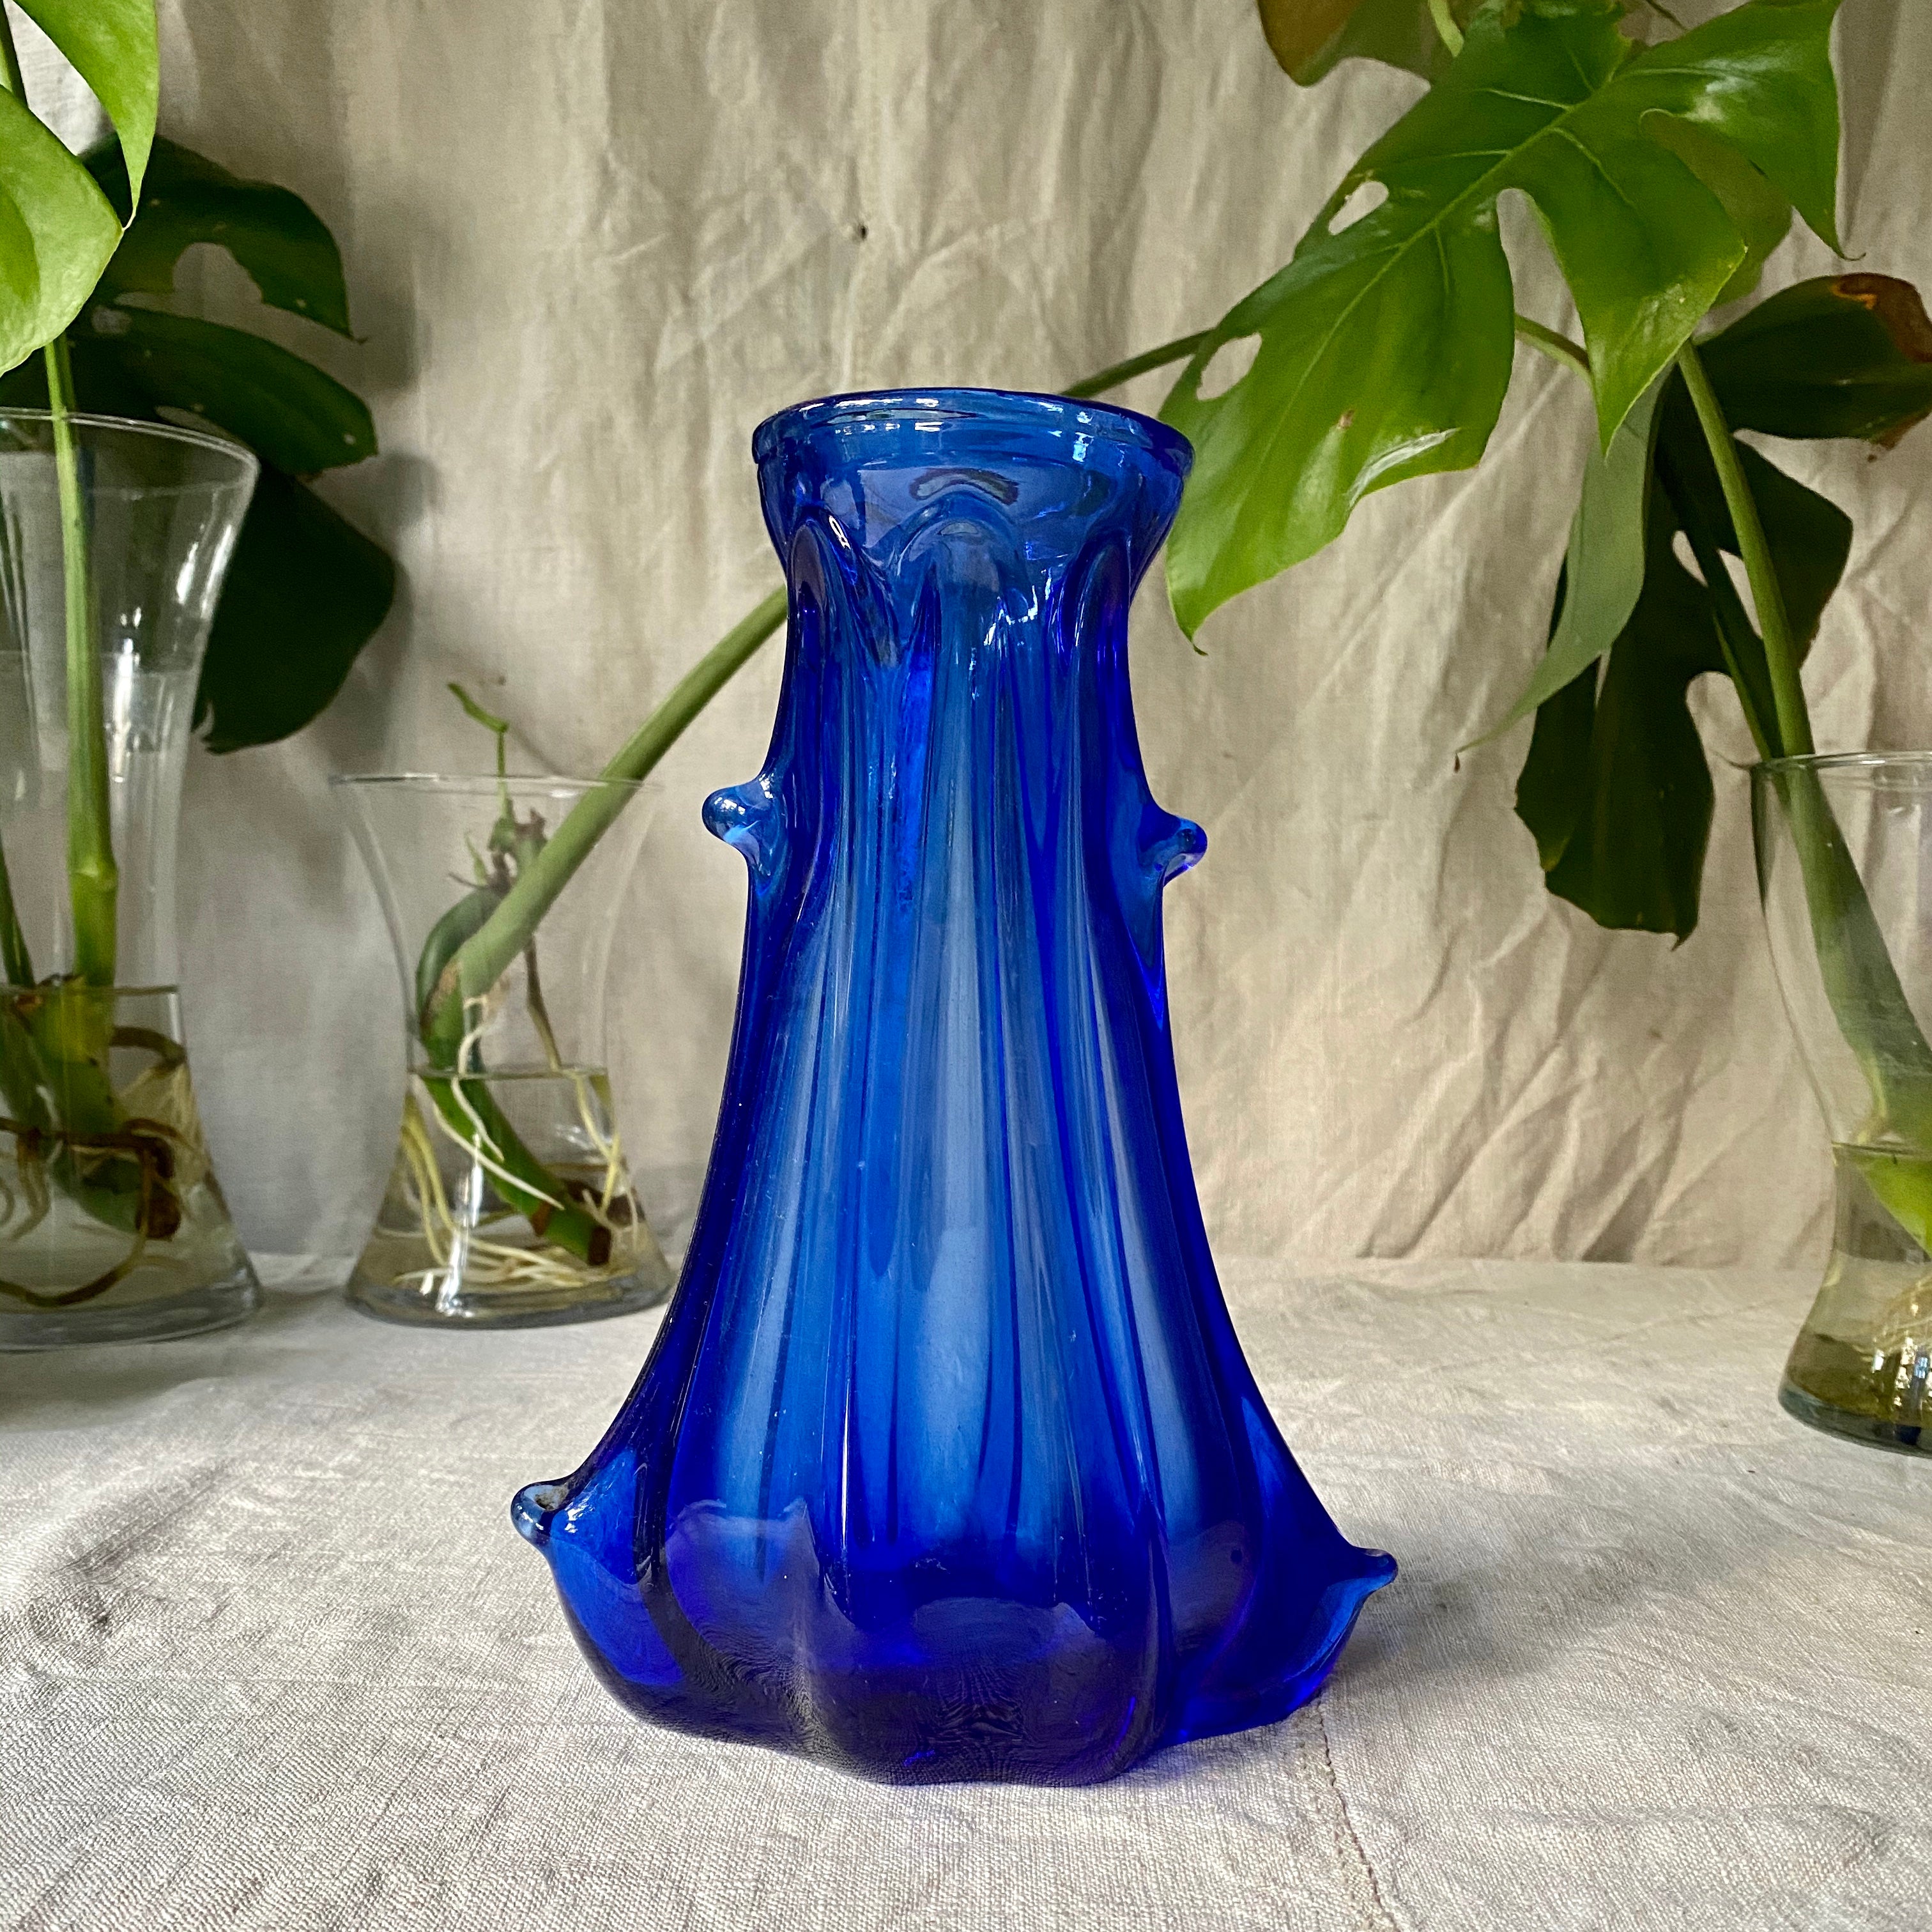 Electric Blue Vase